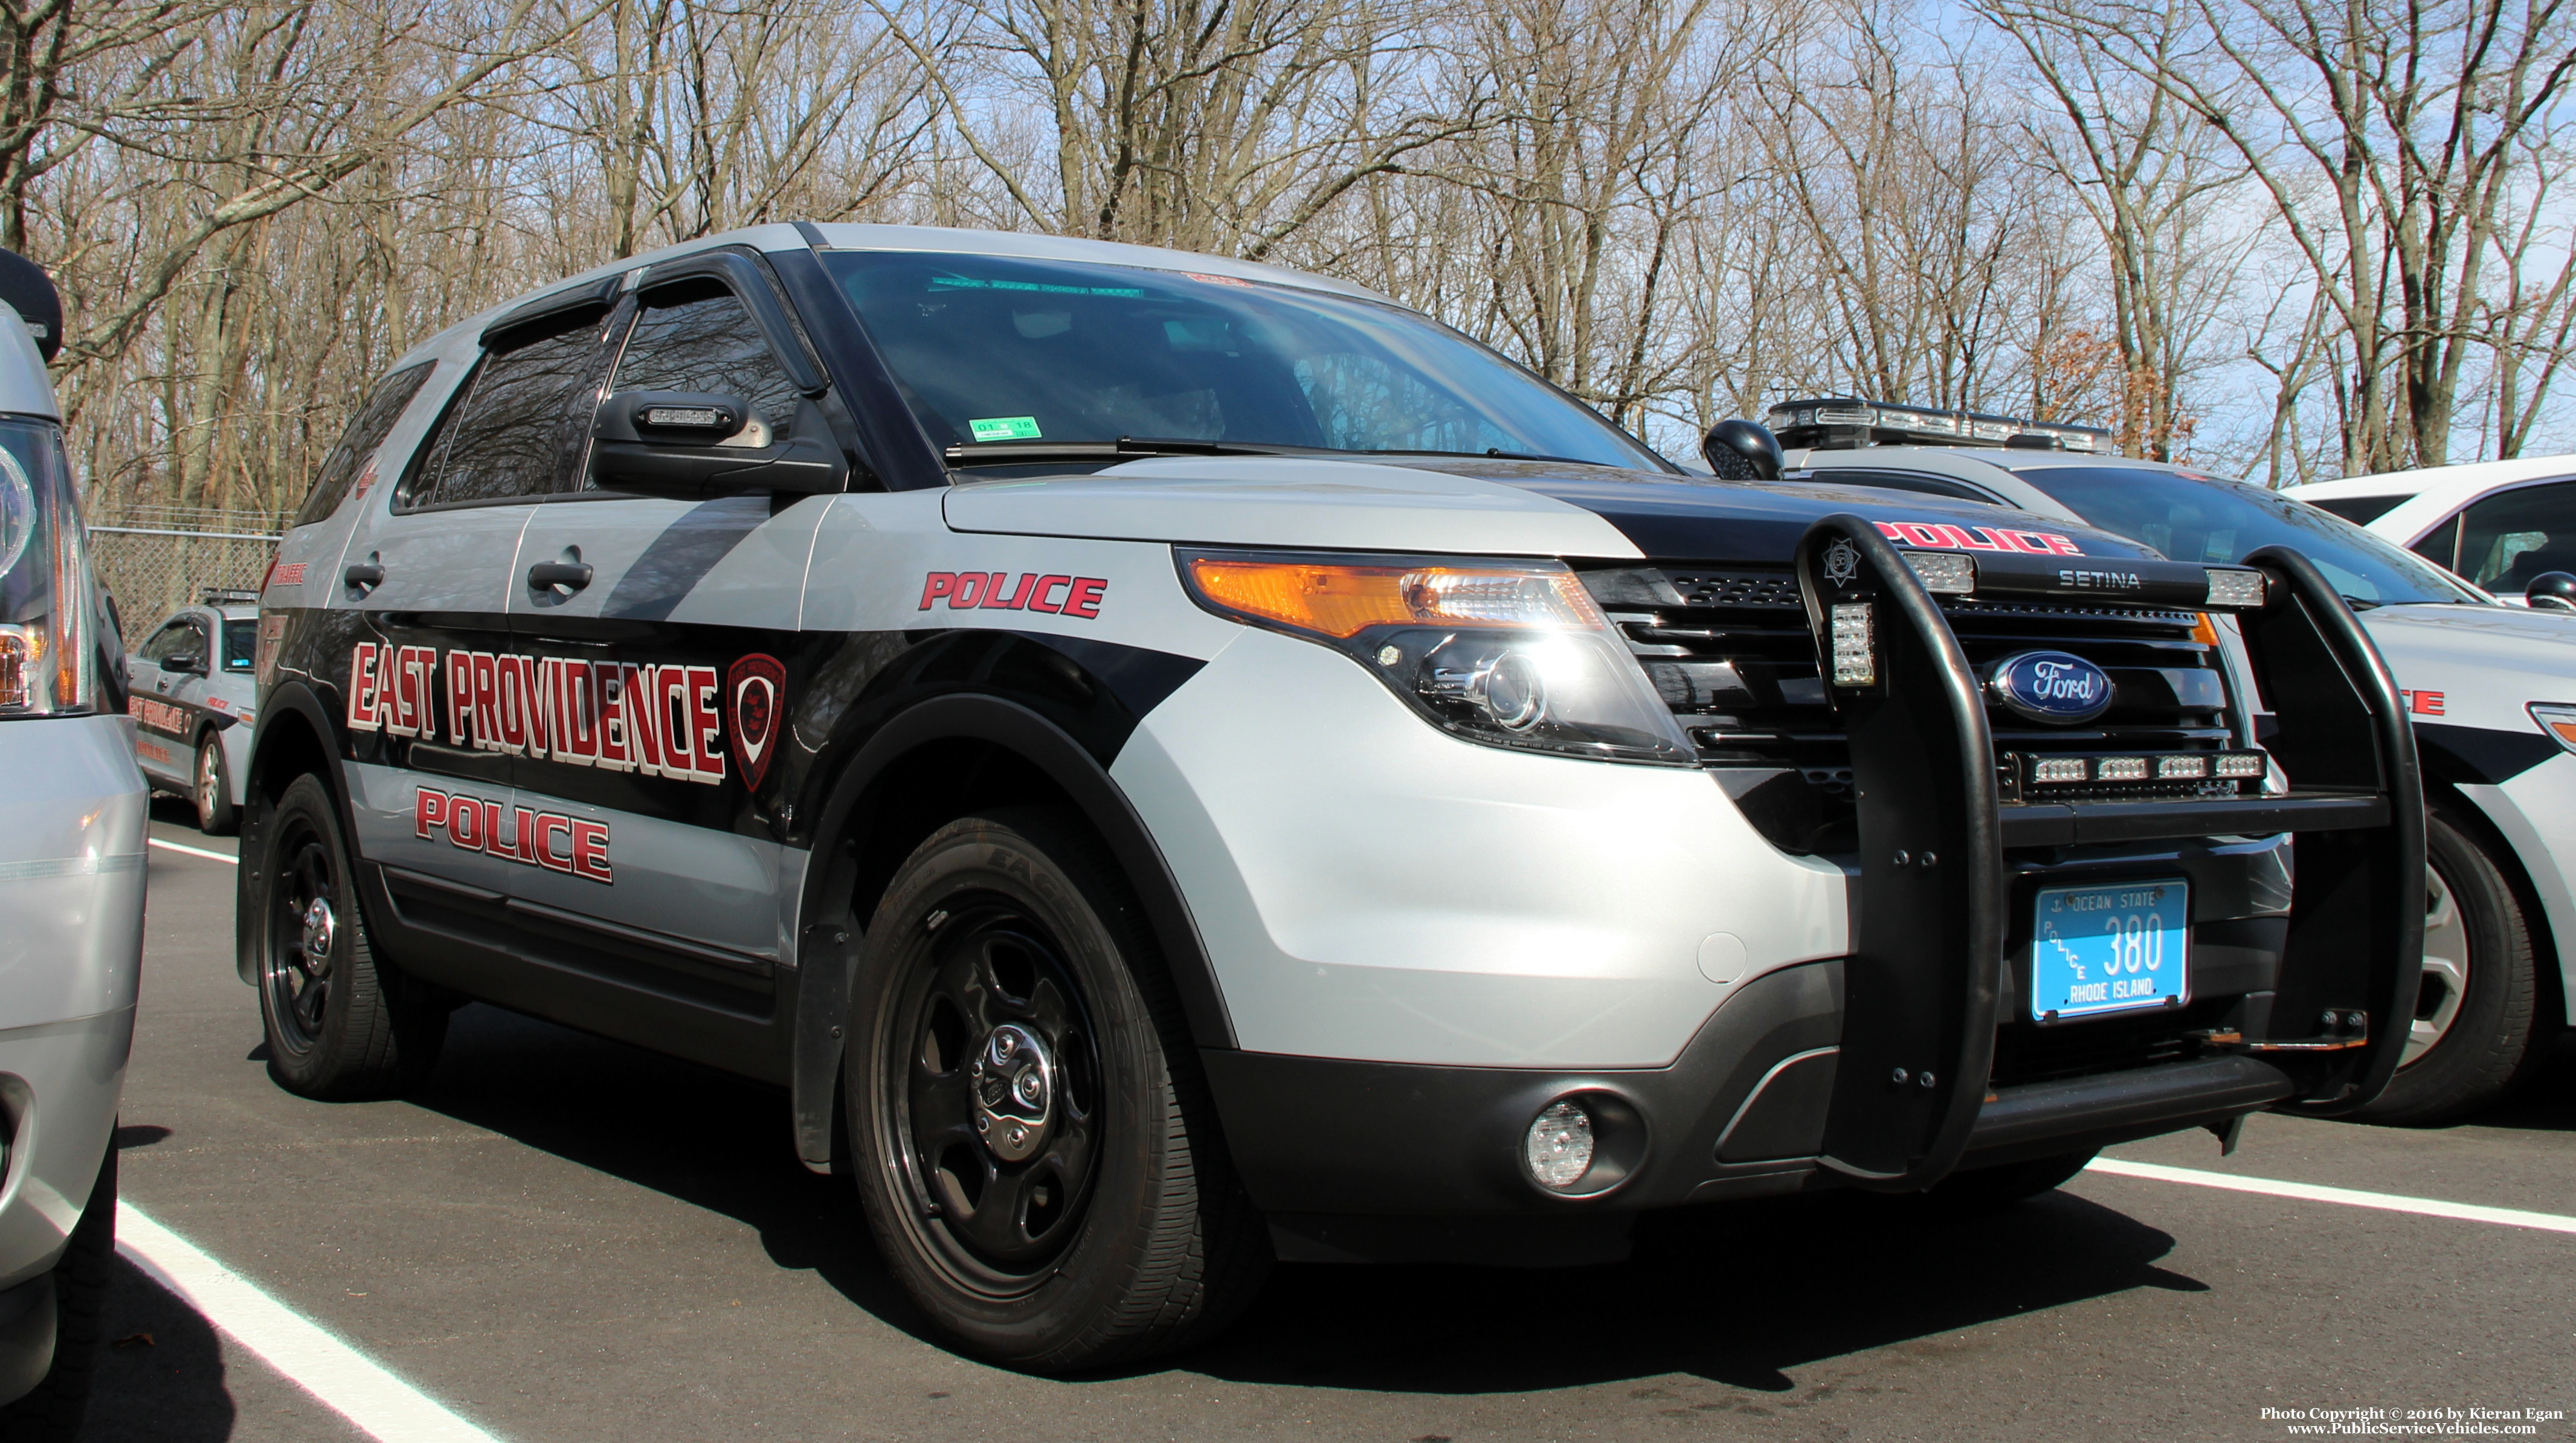 A photo  of East Providence Police
            Car [2]33, a 2014 Ford Police Interceptor Utility             taken by Kieran Egan